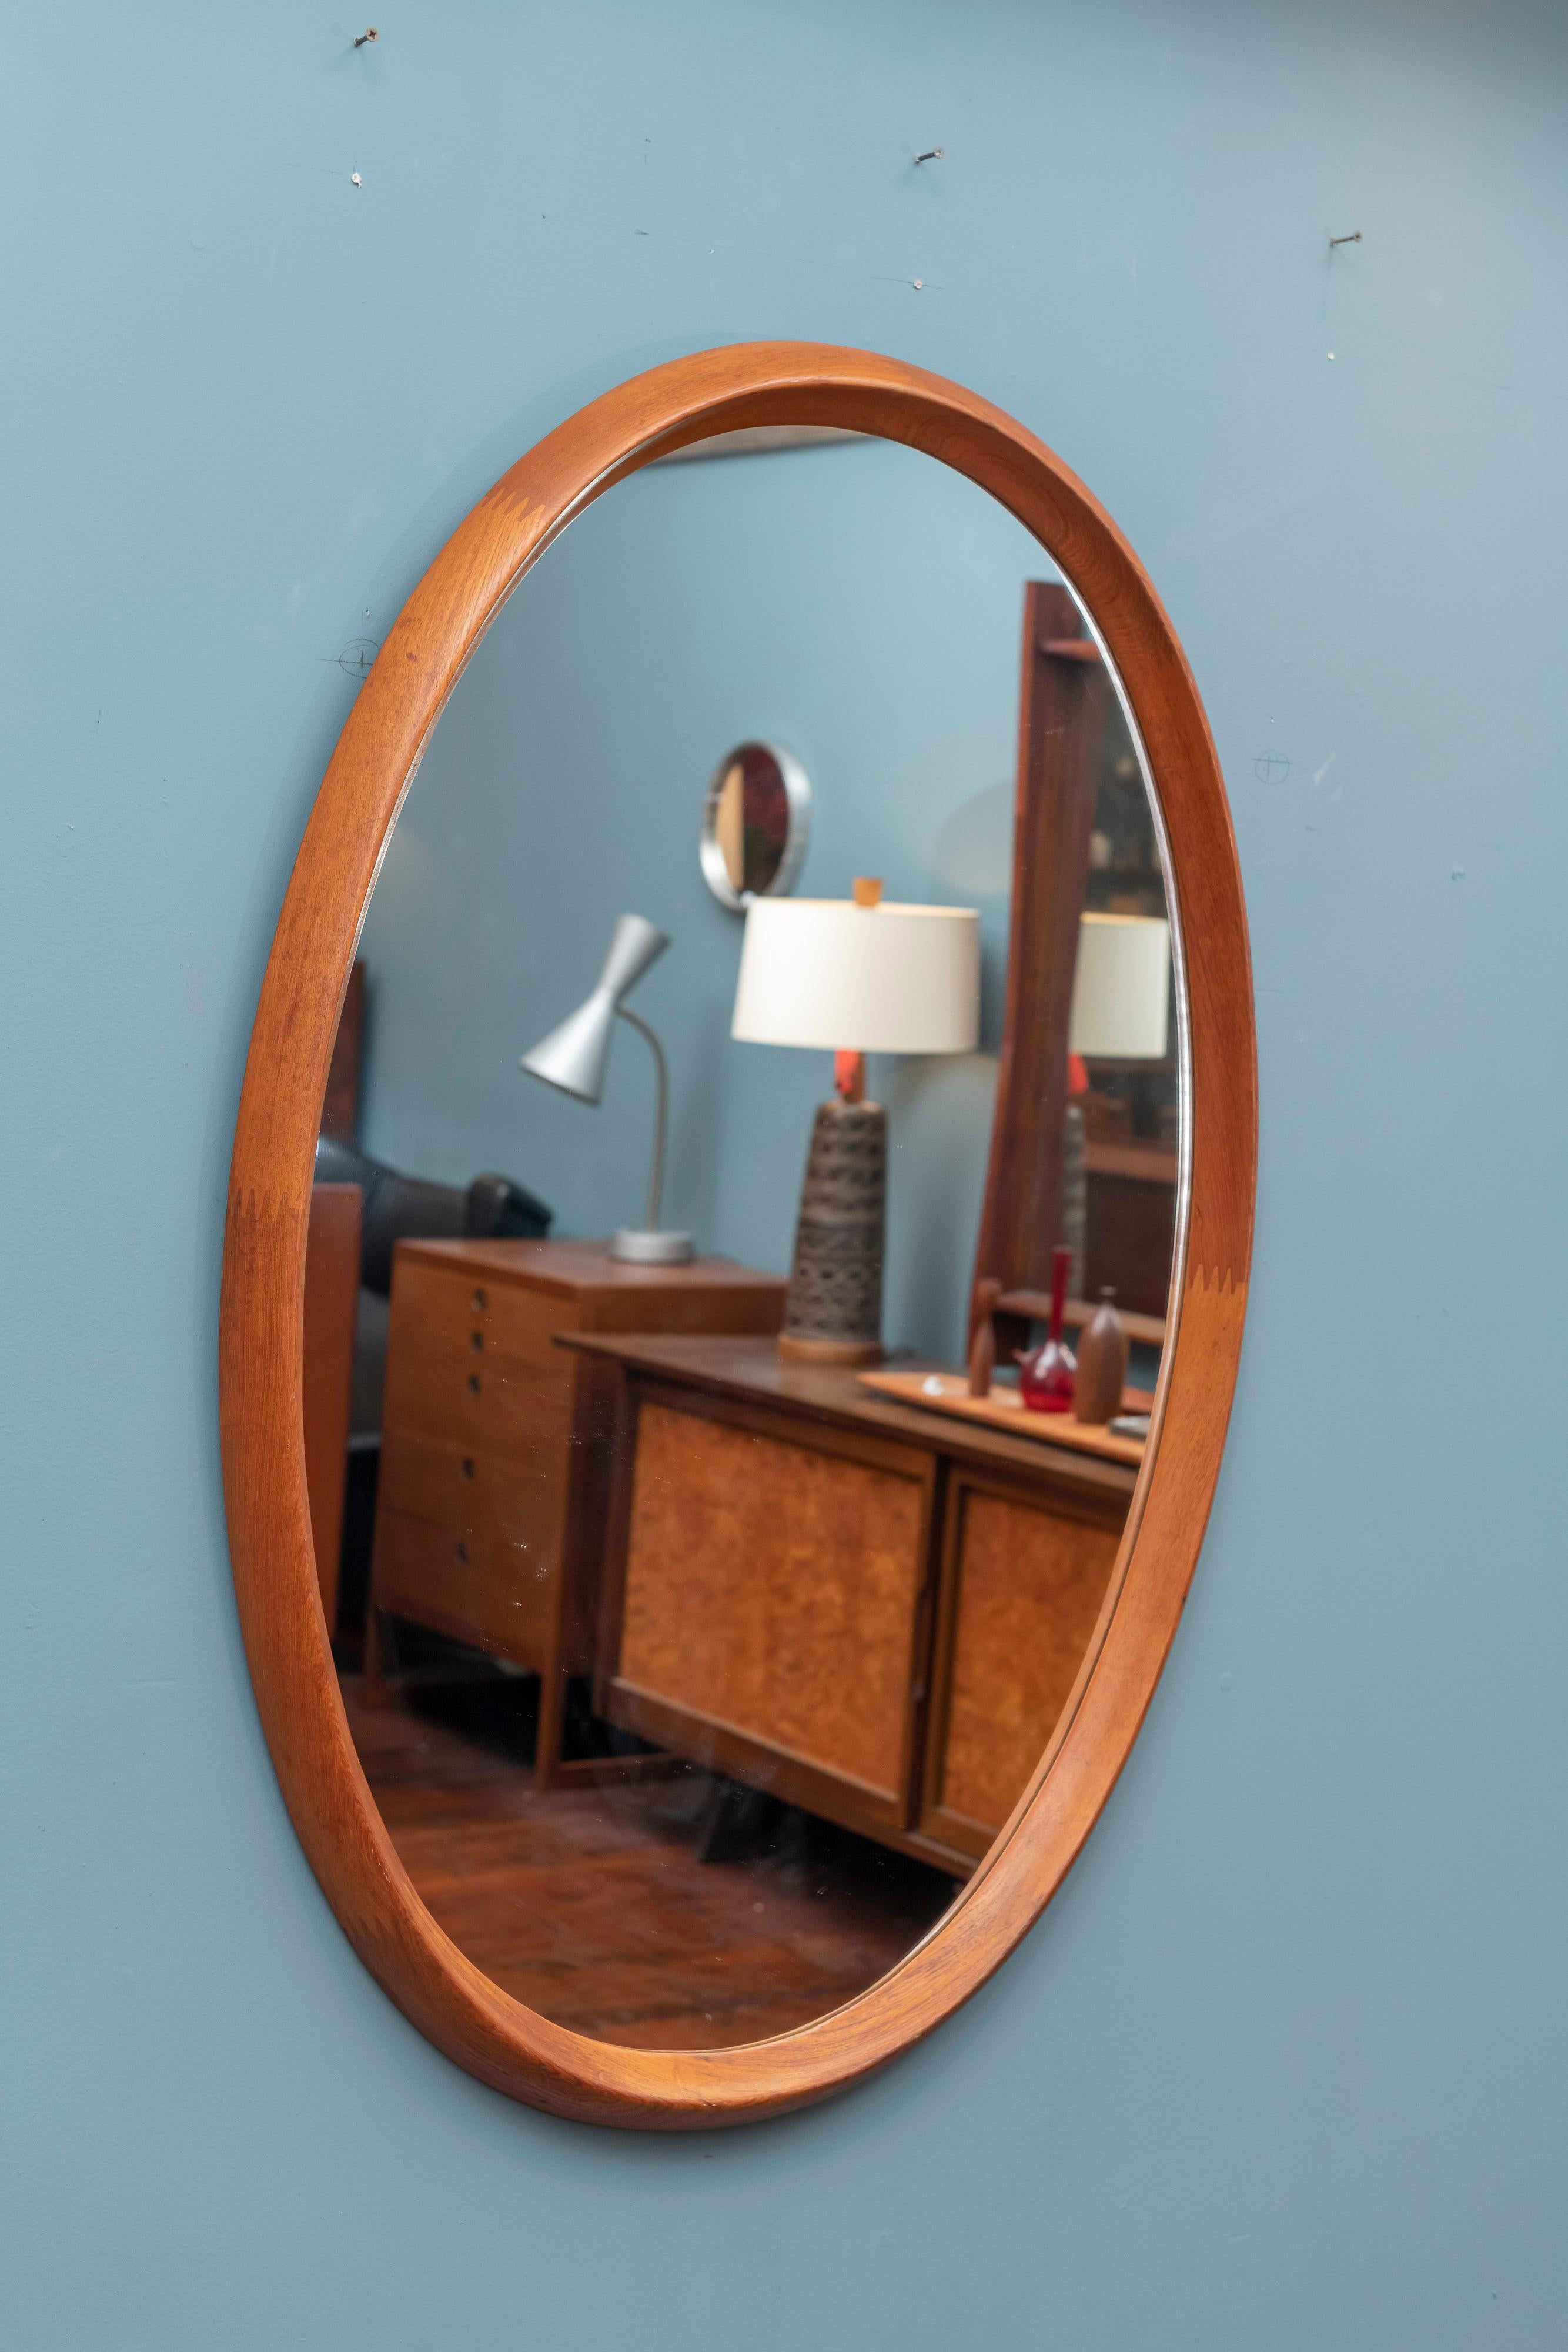 Scandinavian modern teak oval wall mirror by Pedersen & Hansen, Denmark. Large mirror 44